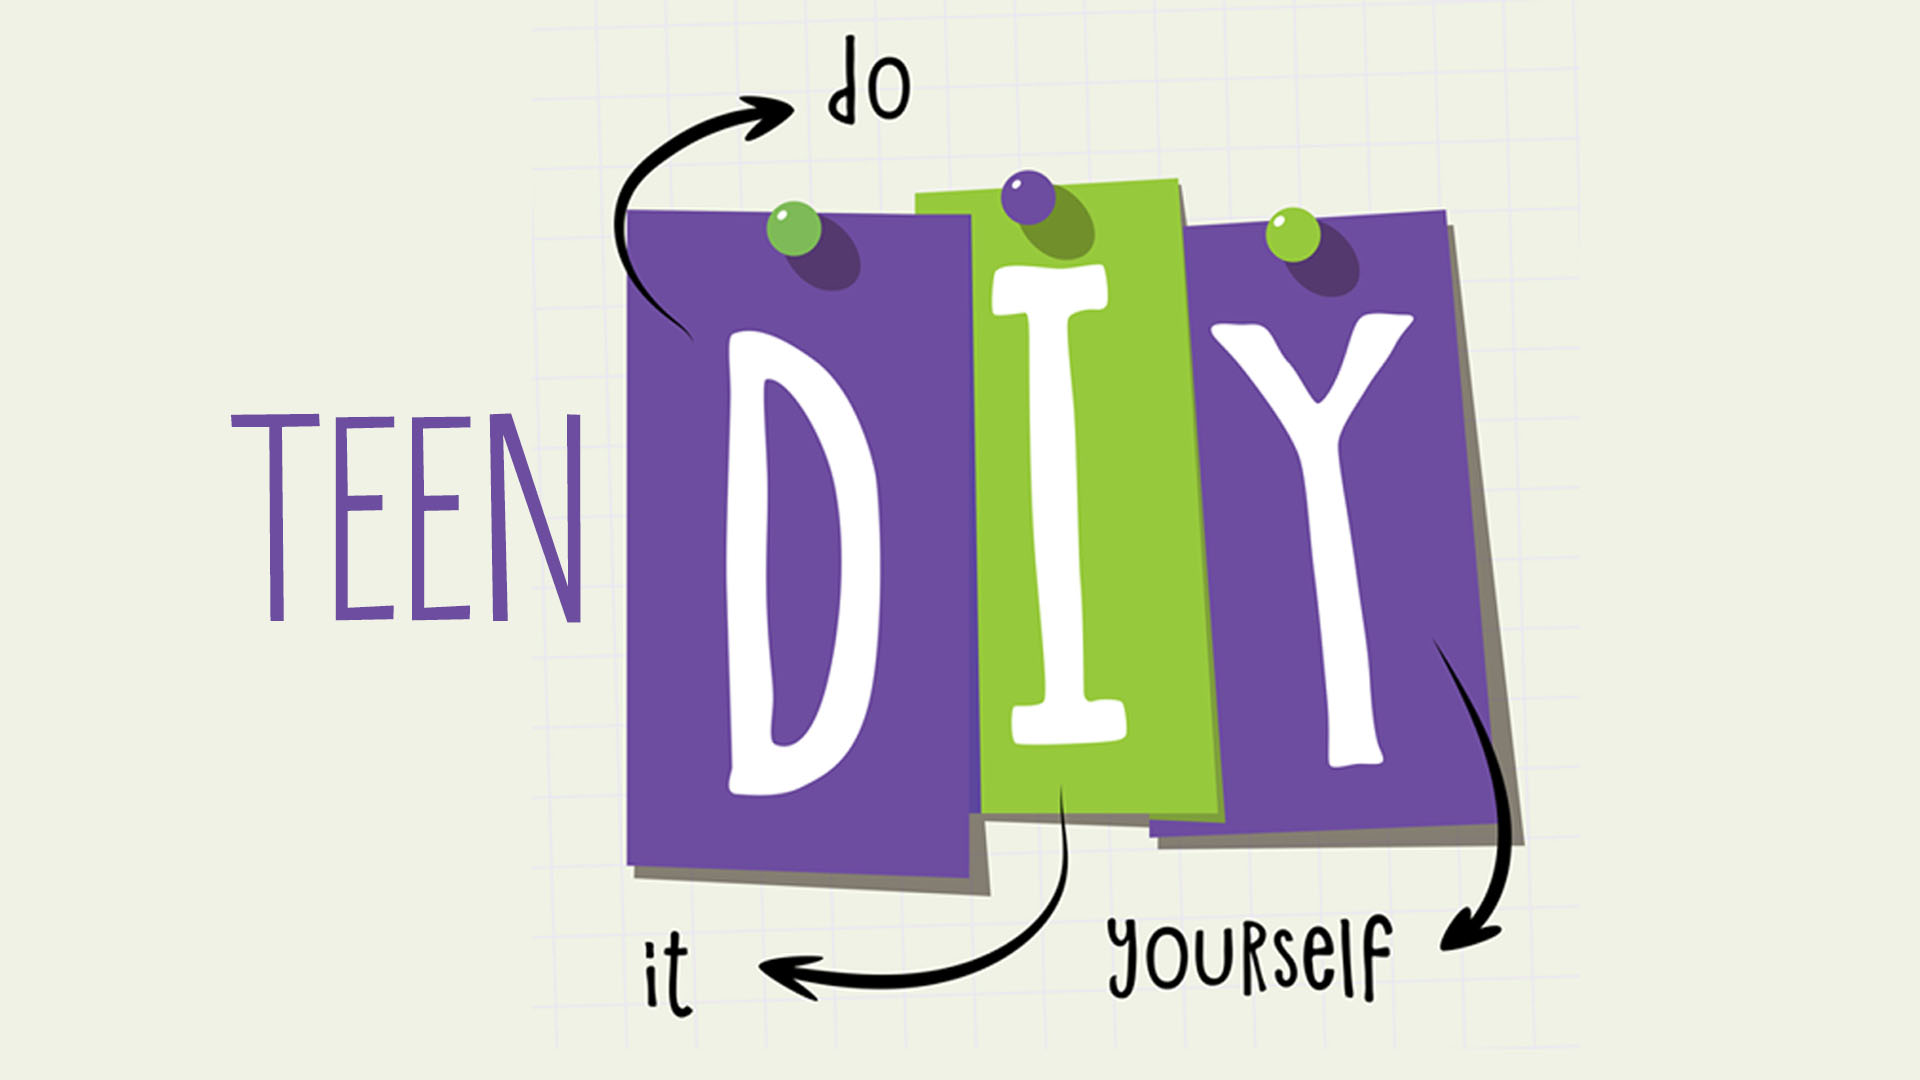 Teen DIY - Do it yourself